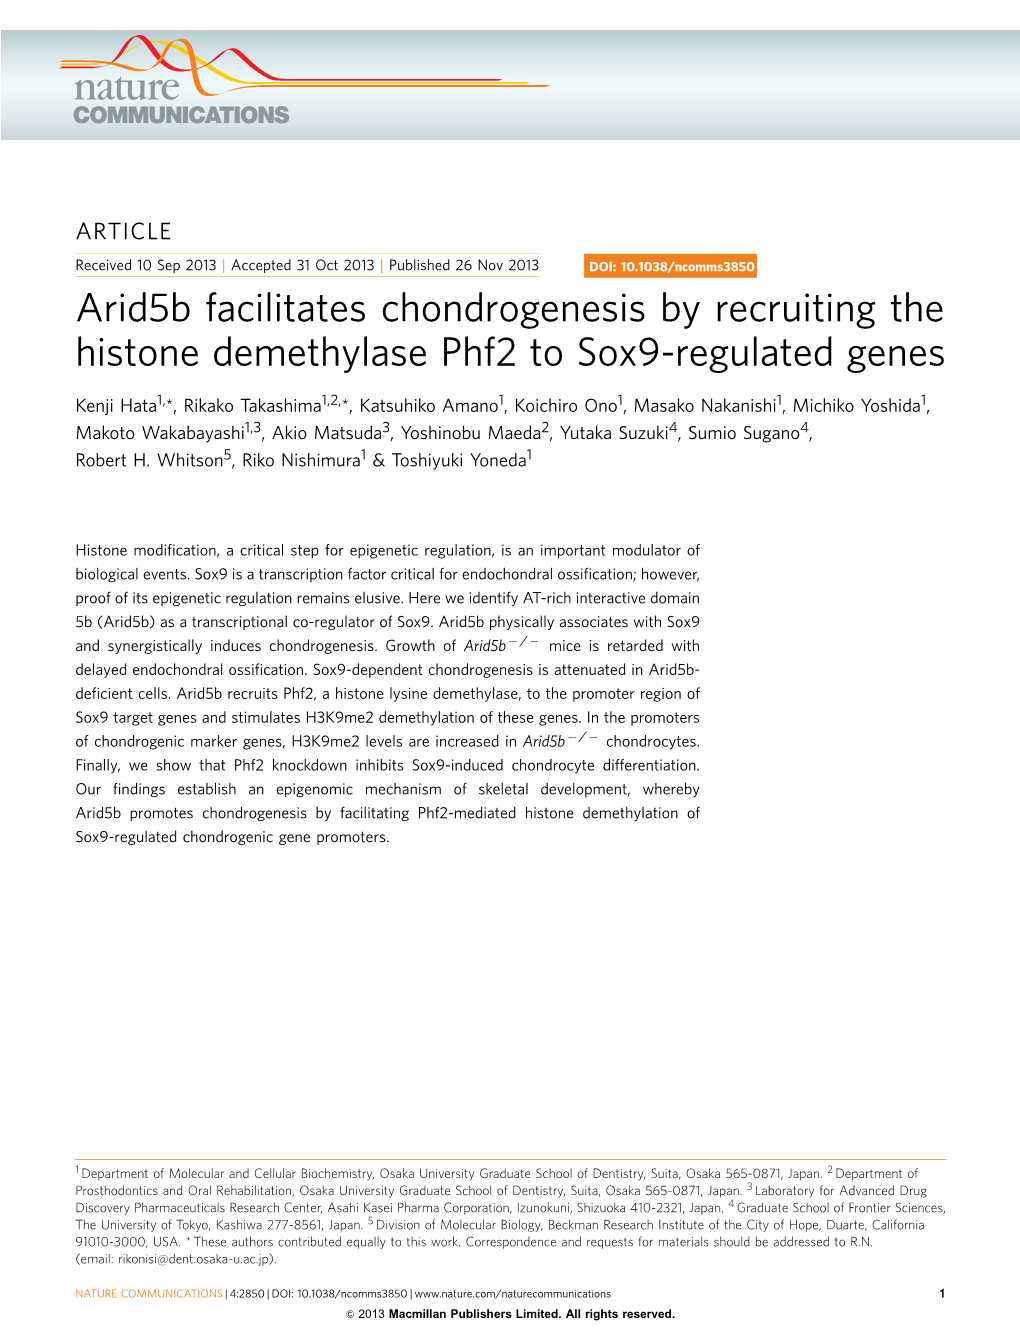 Arid5b Facilitates Chondrogenesis by Recruiting the Histone Demethylase Phf2 to Sox9-Regulated Genes